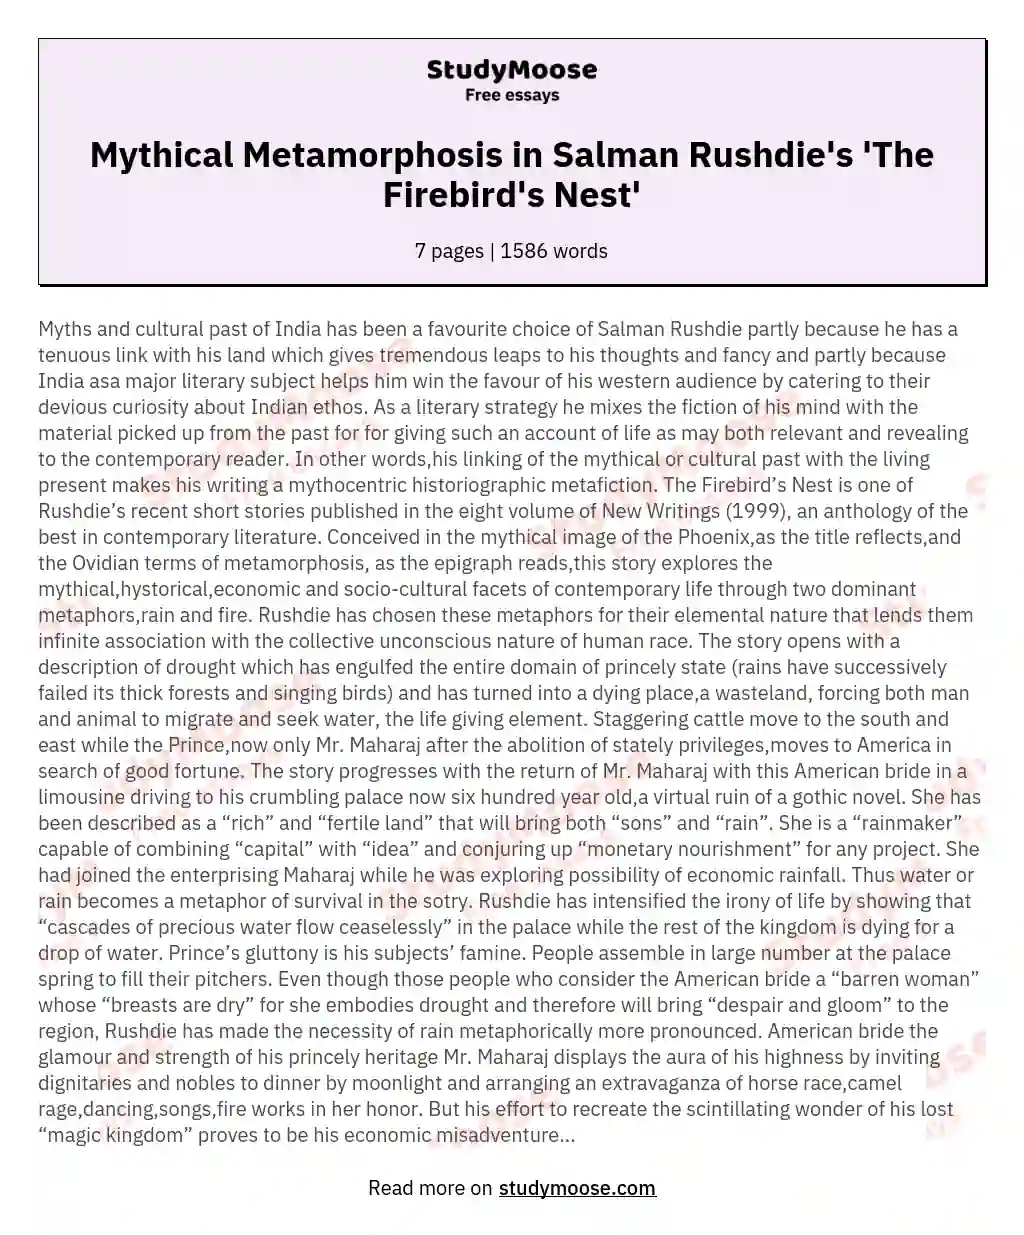 Mythical Metamorphosis in Salman Rushdie's 'The Firebird's Nest' essay